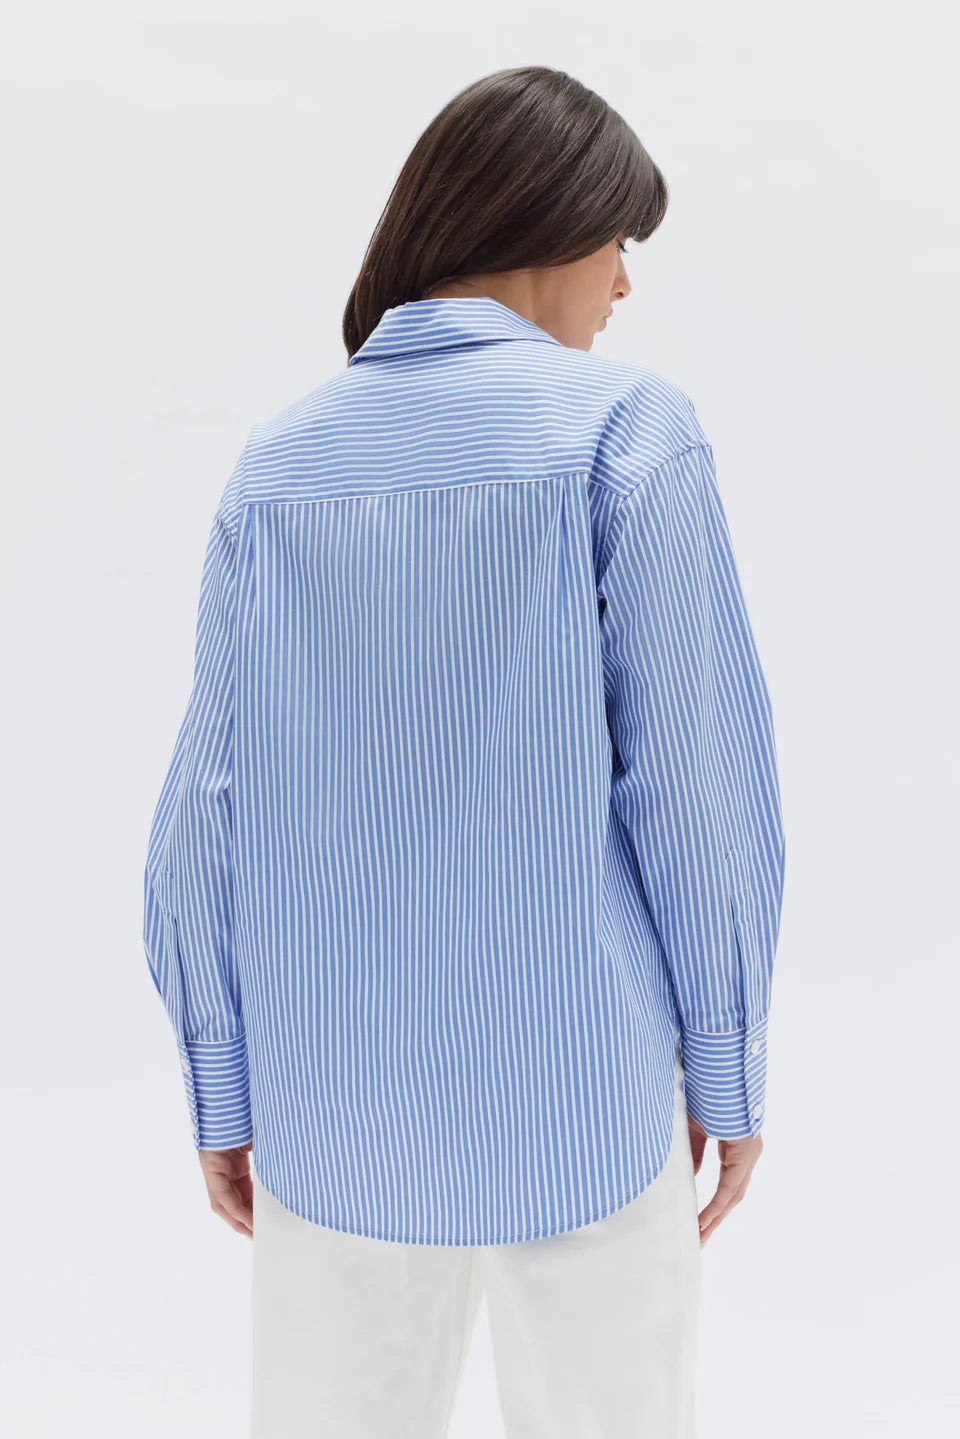 Assembly Label Signature Poplin Shirt - Blue/White Stripe